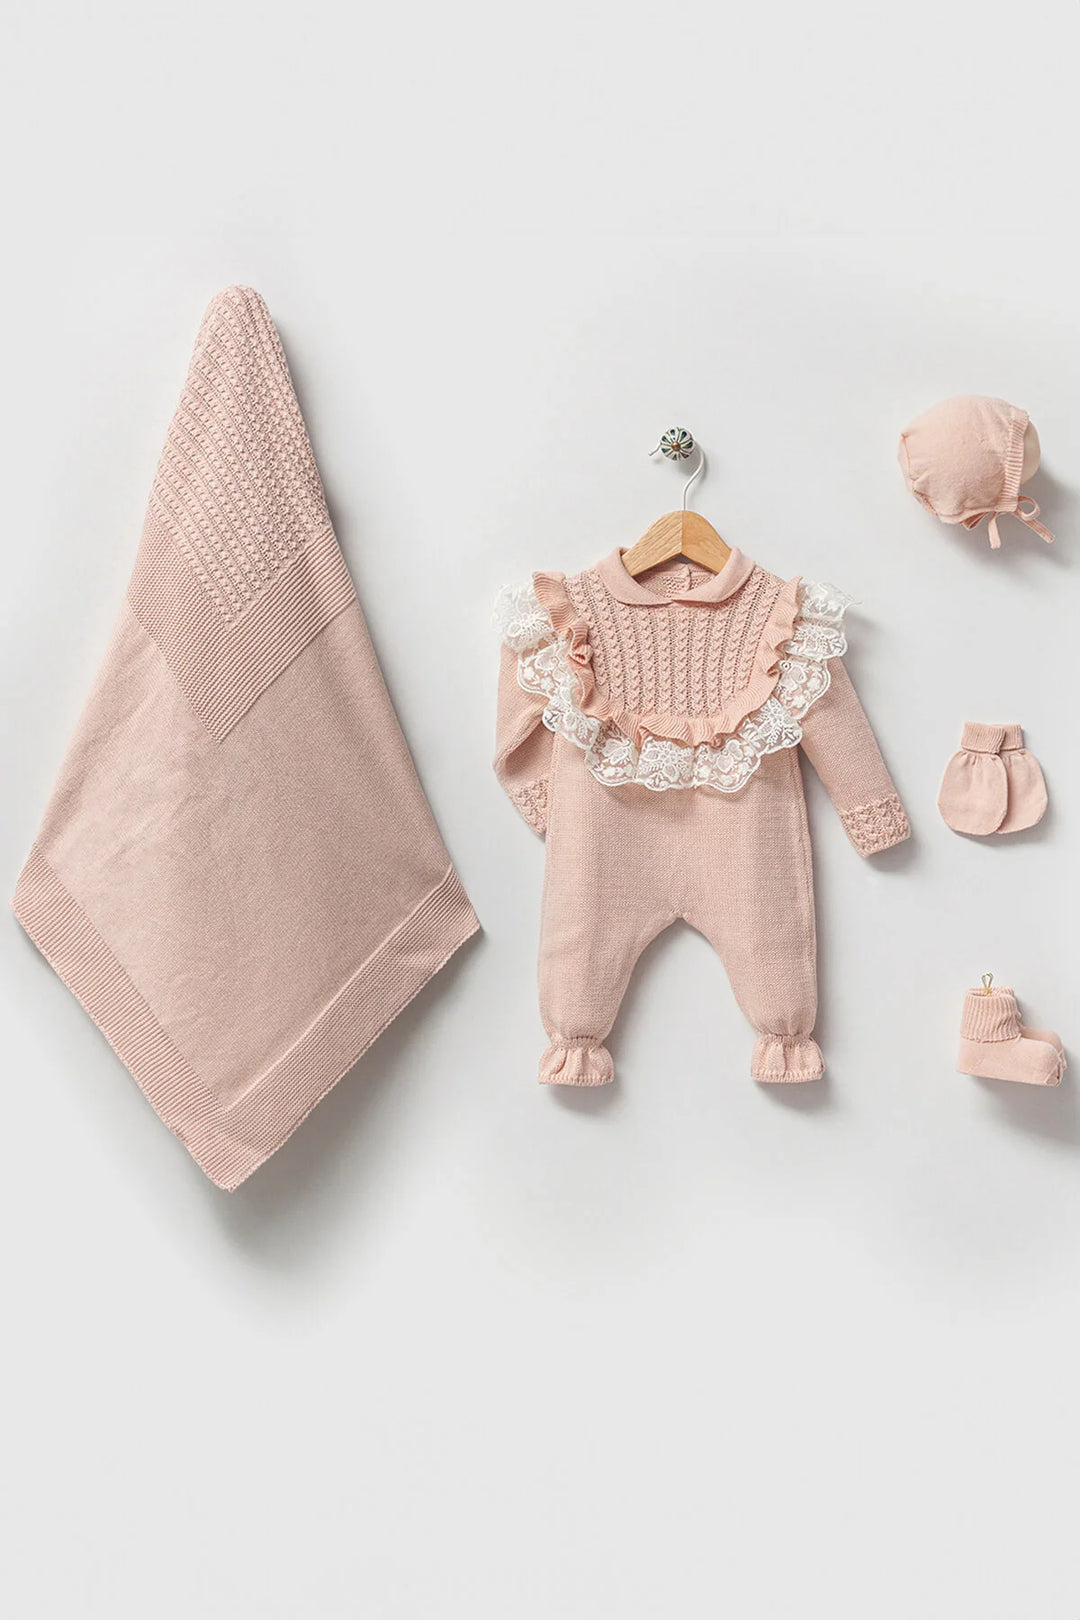 Daphne Powder Newborn Knitwear Coming Home Set (5pcs)